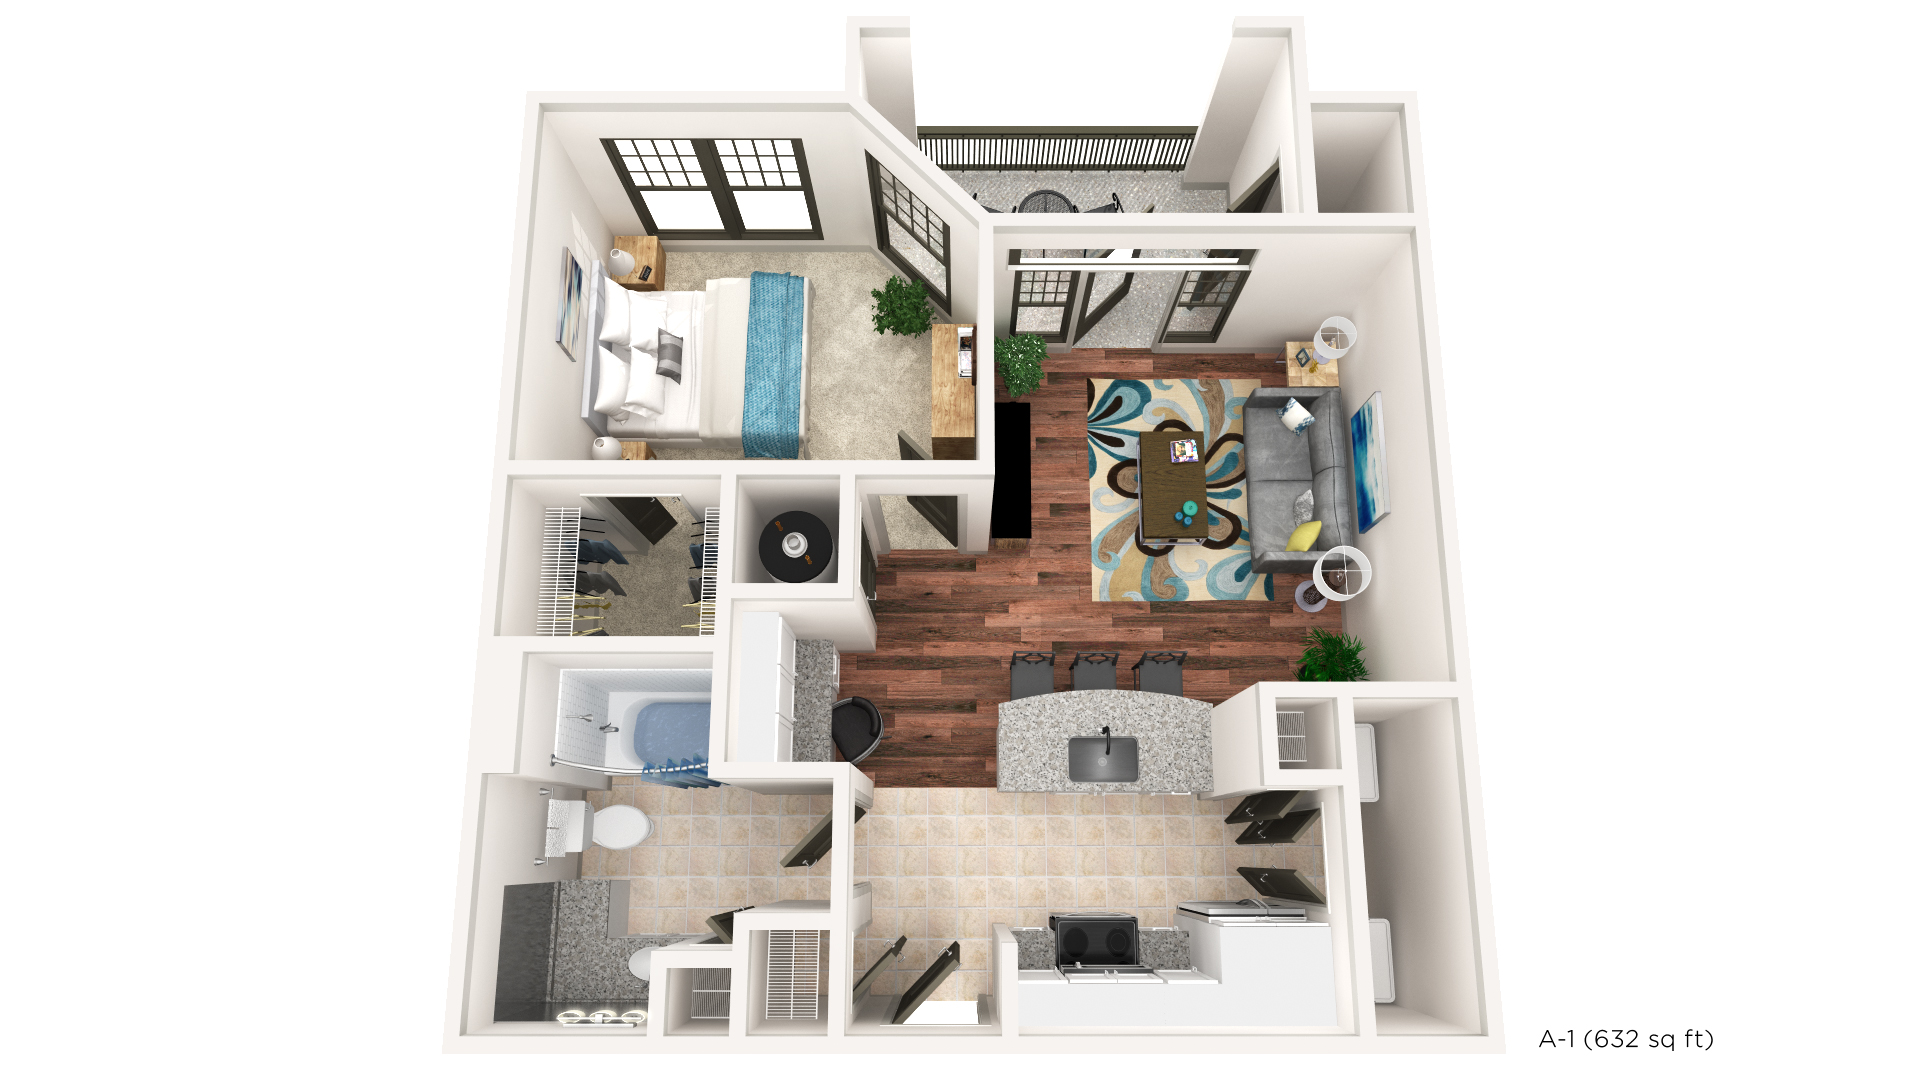 Brookleigh Flats Luxury Apartment Homes - Floorplan - A-1